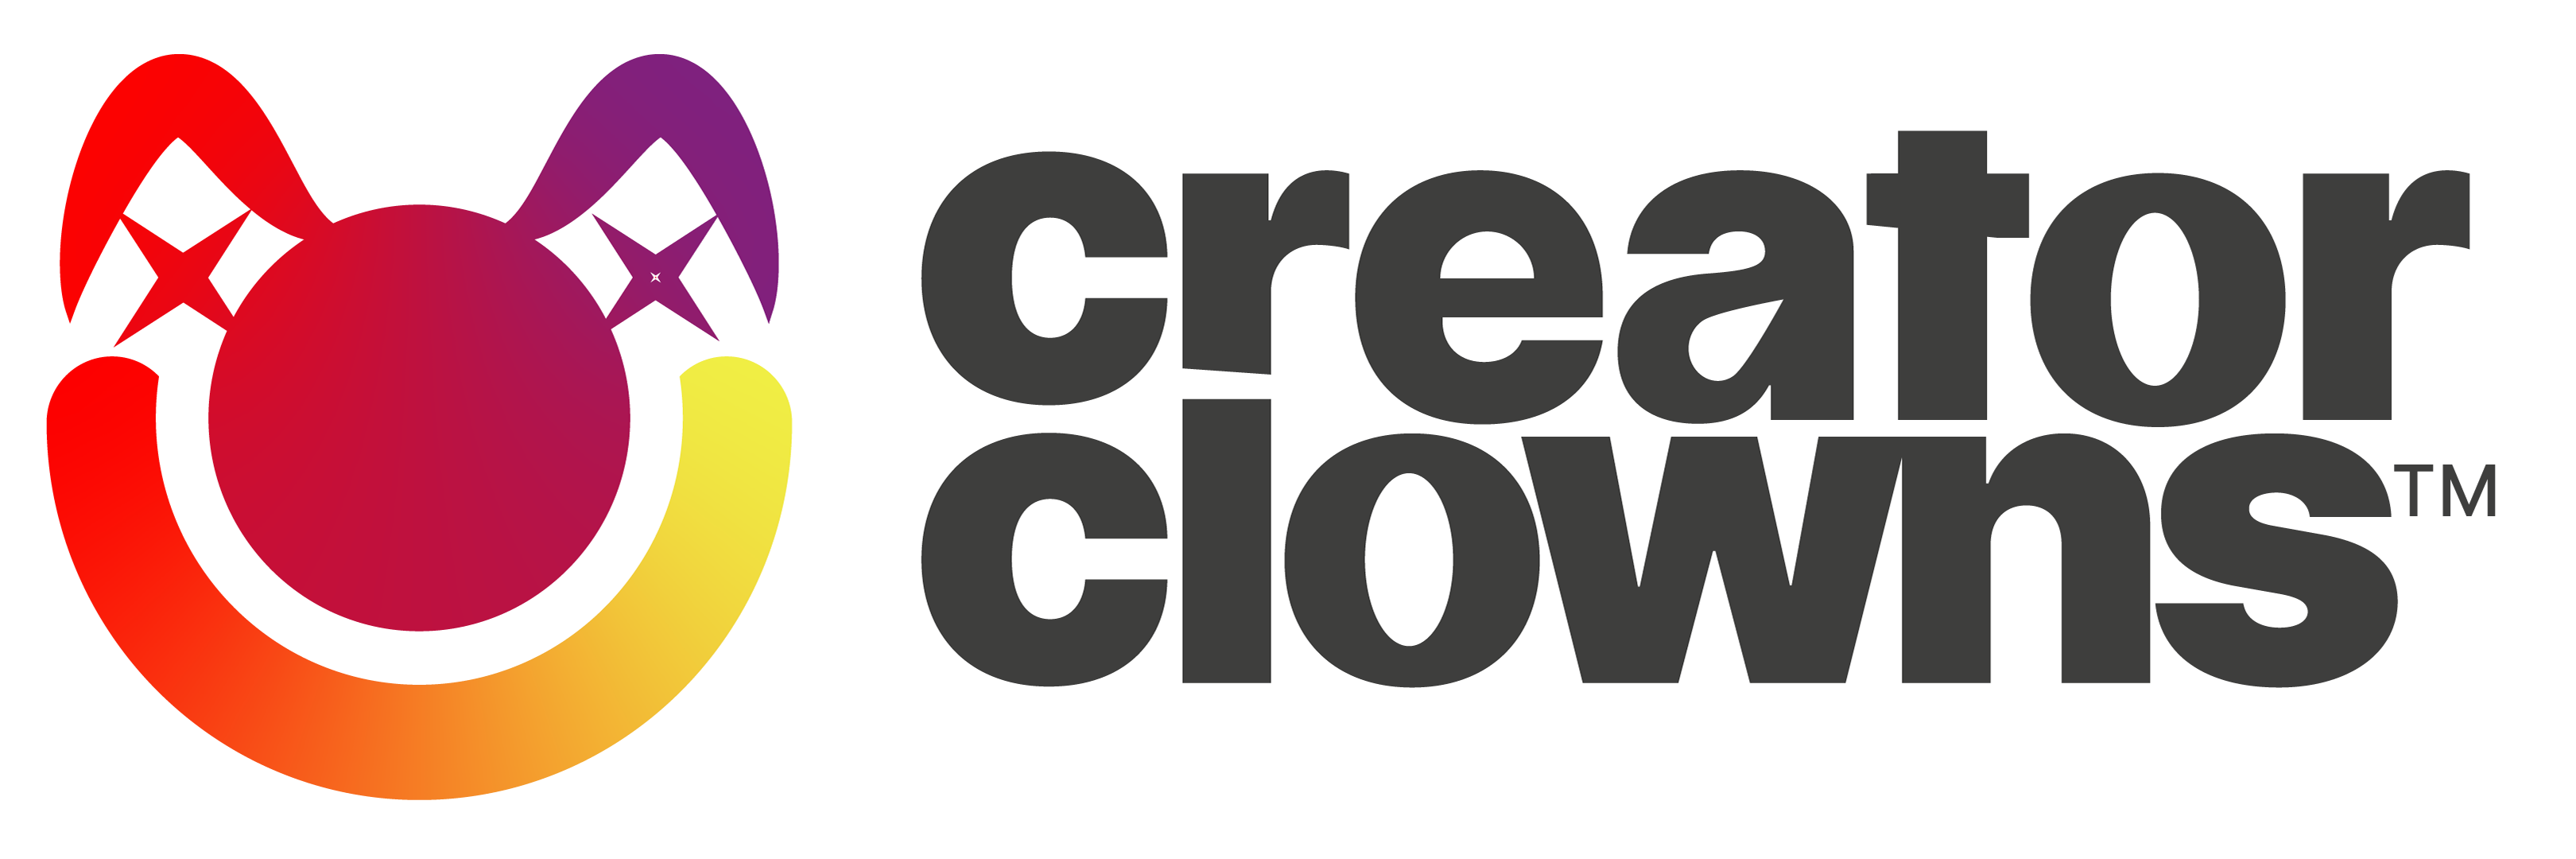 creator clowns